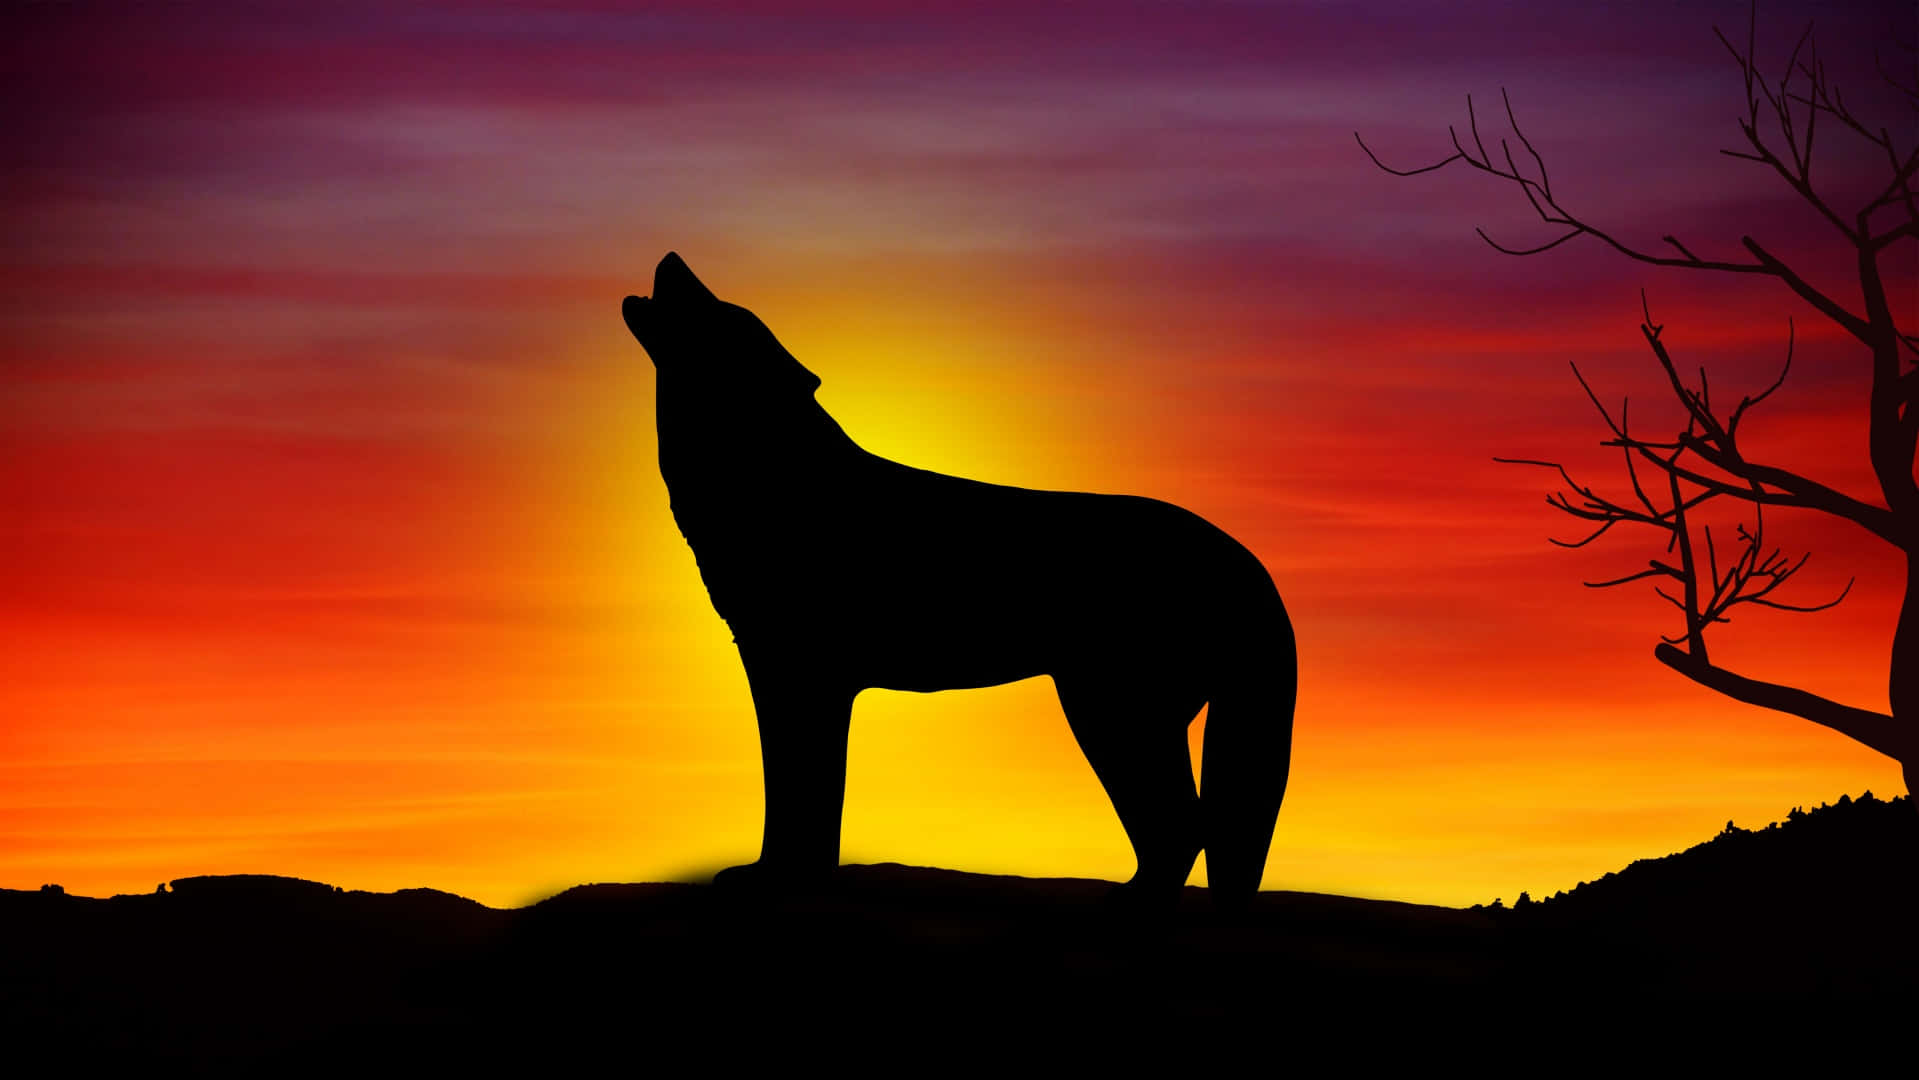 Majestic Wolf Silhouette against Moonlit Sky Wallpaper